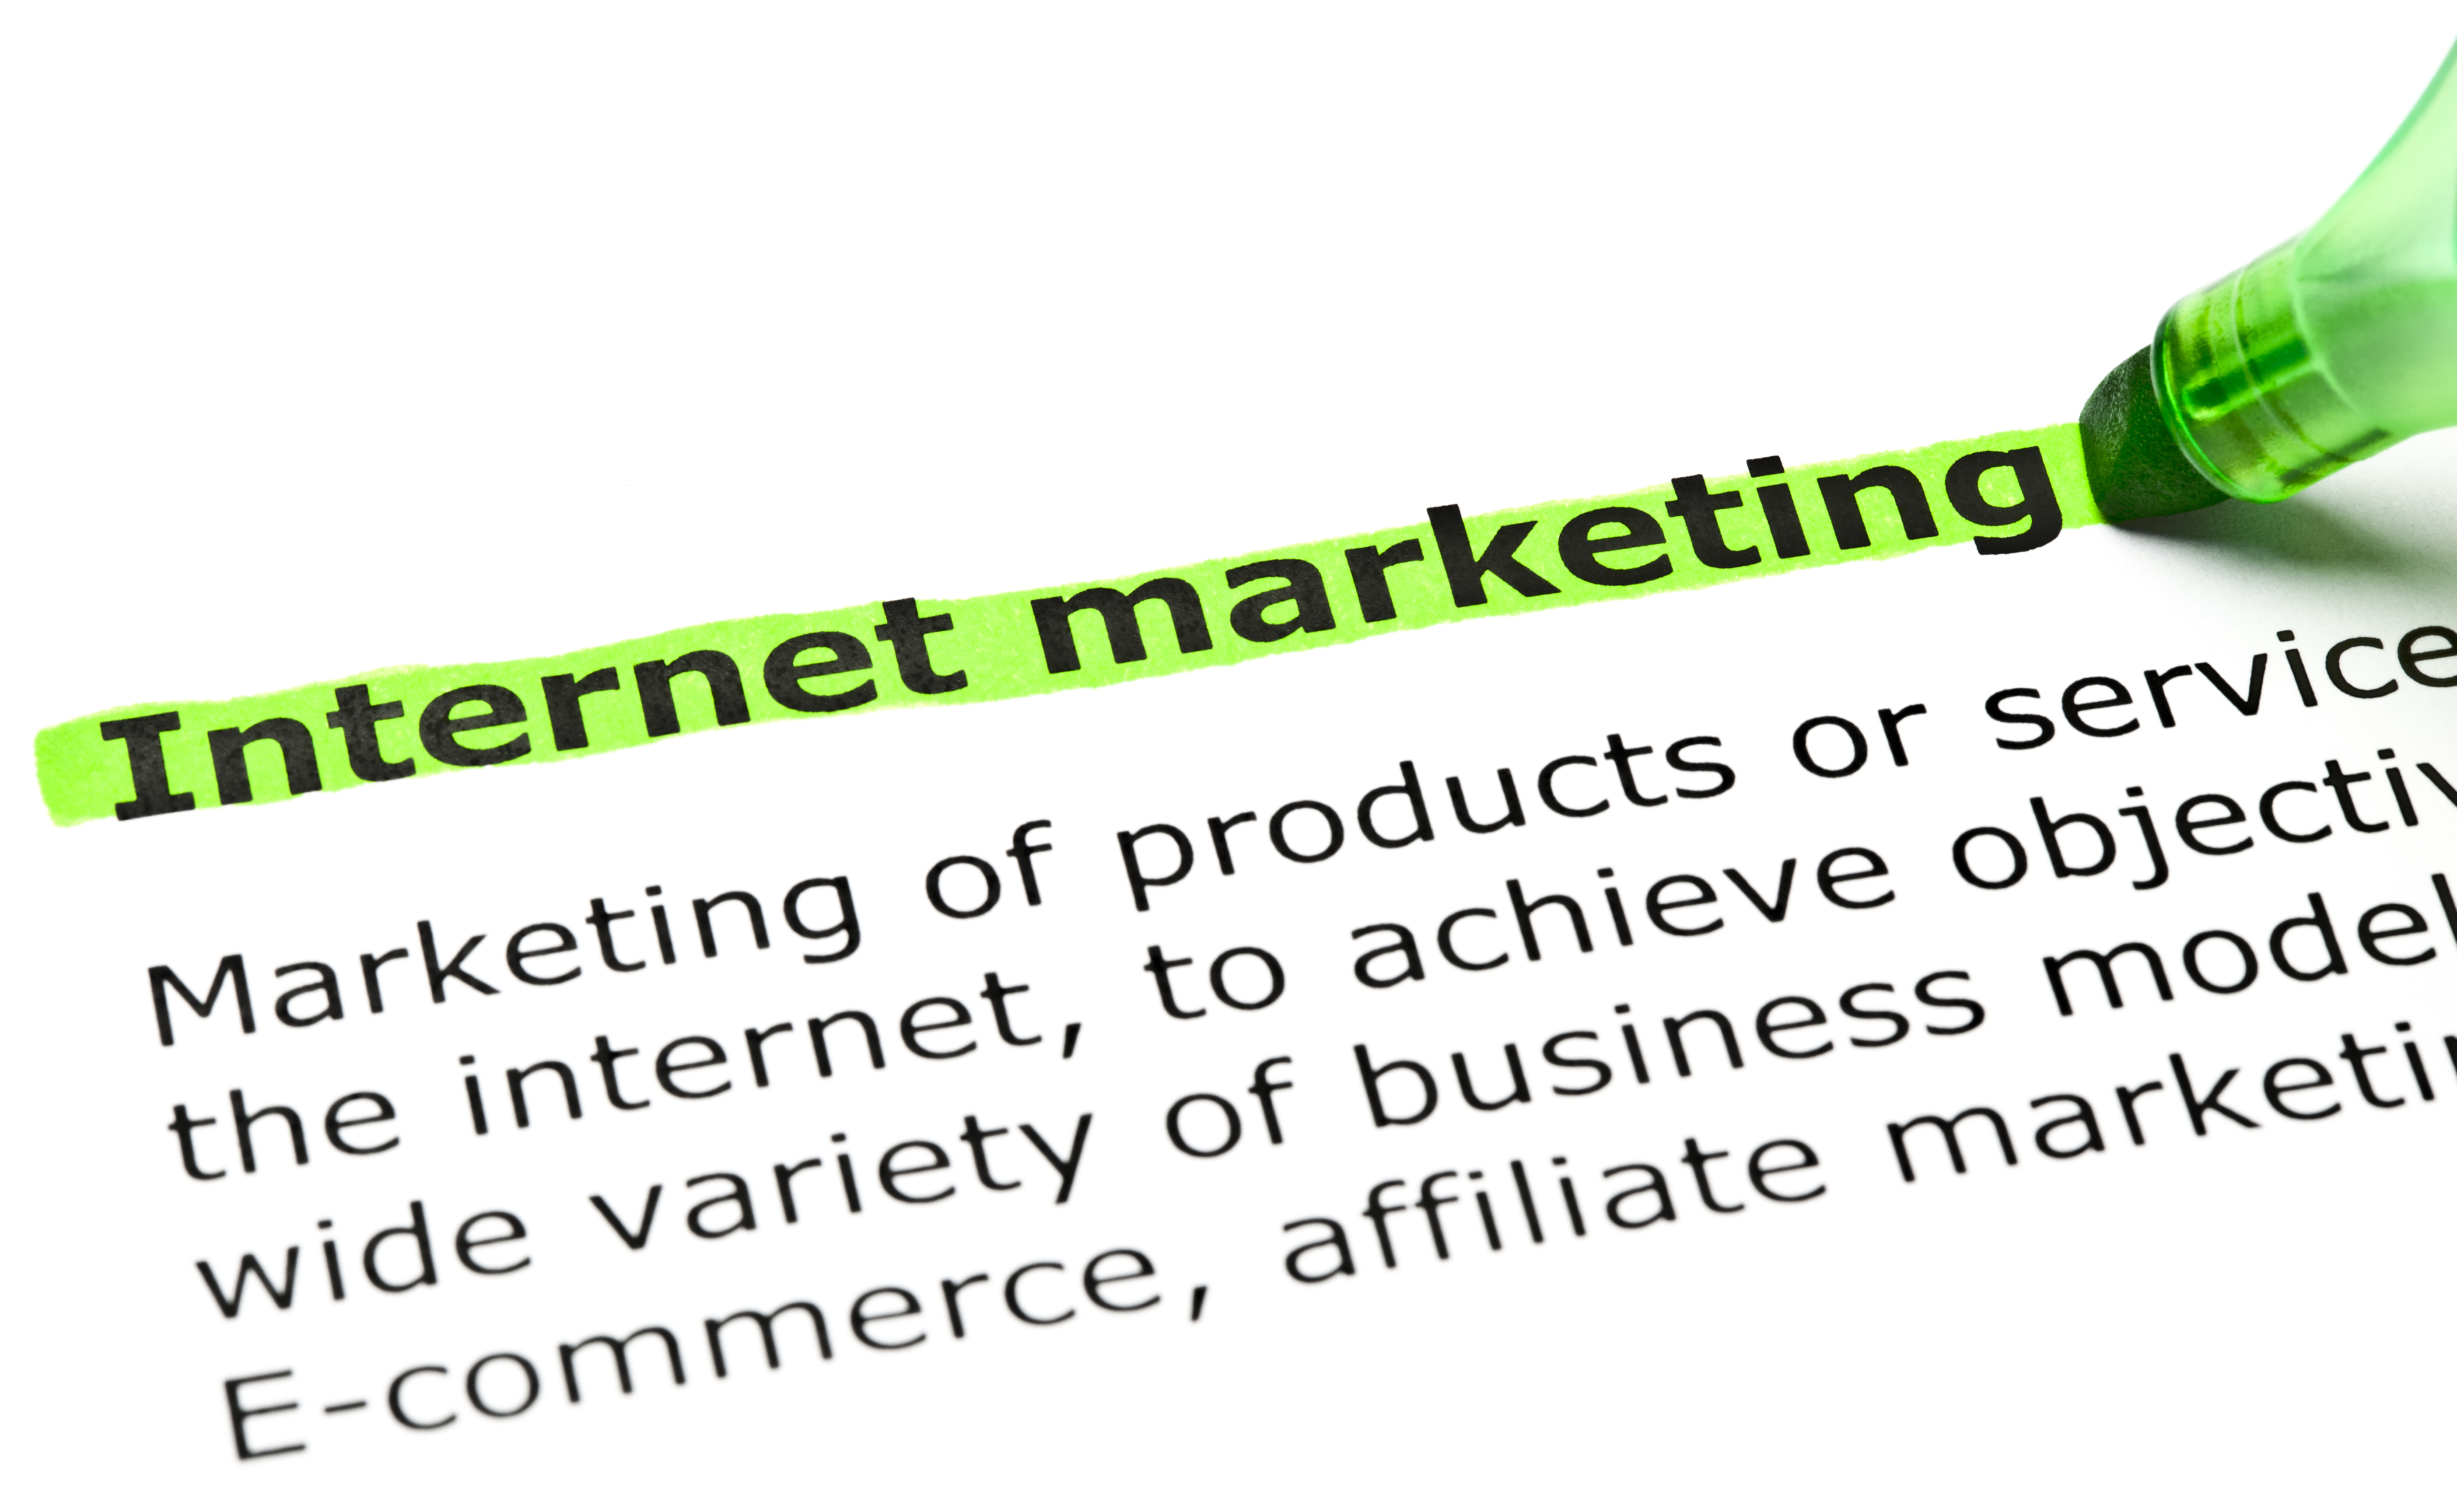 internet-marketing-tips-for-small-businesses.jpg